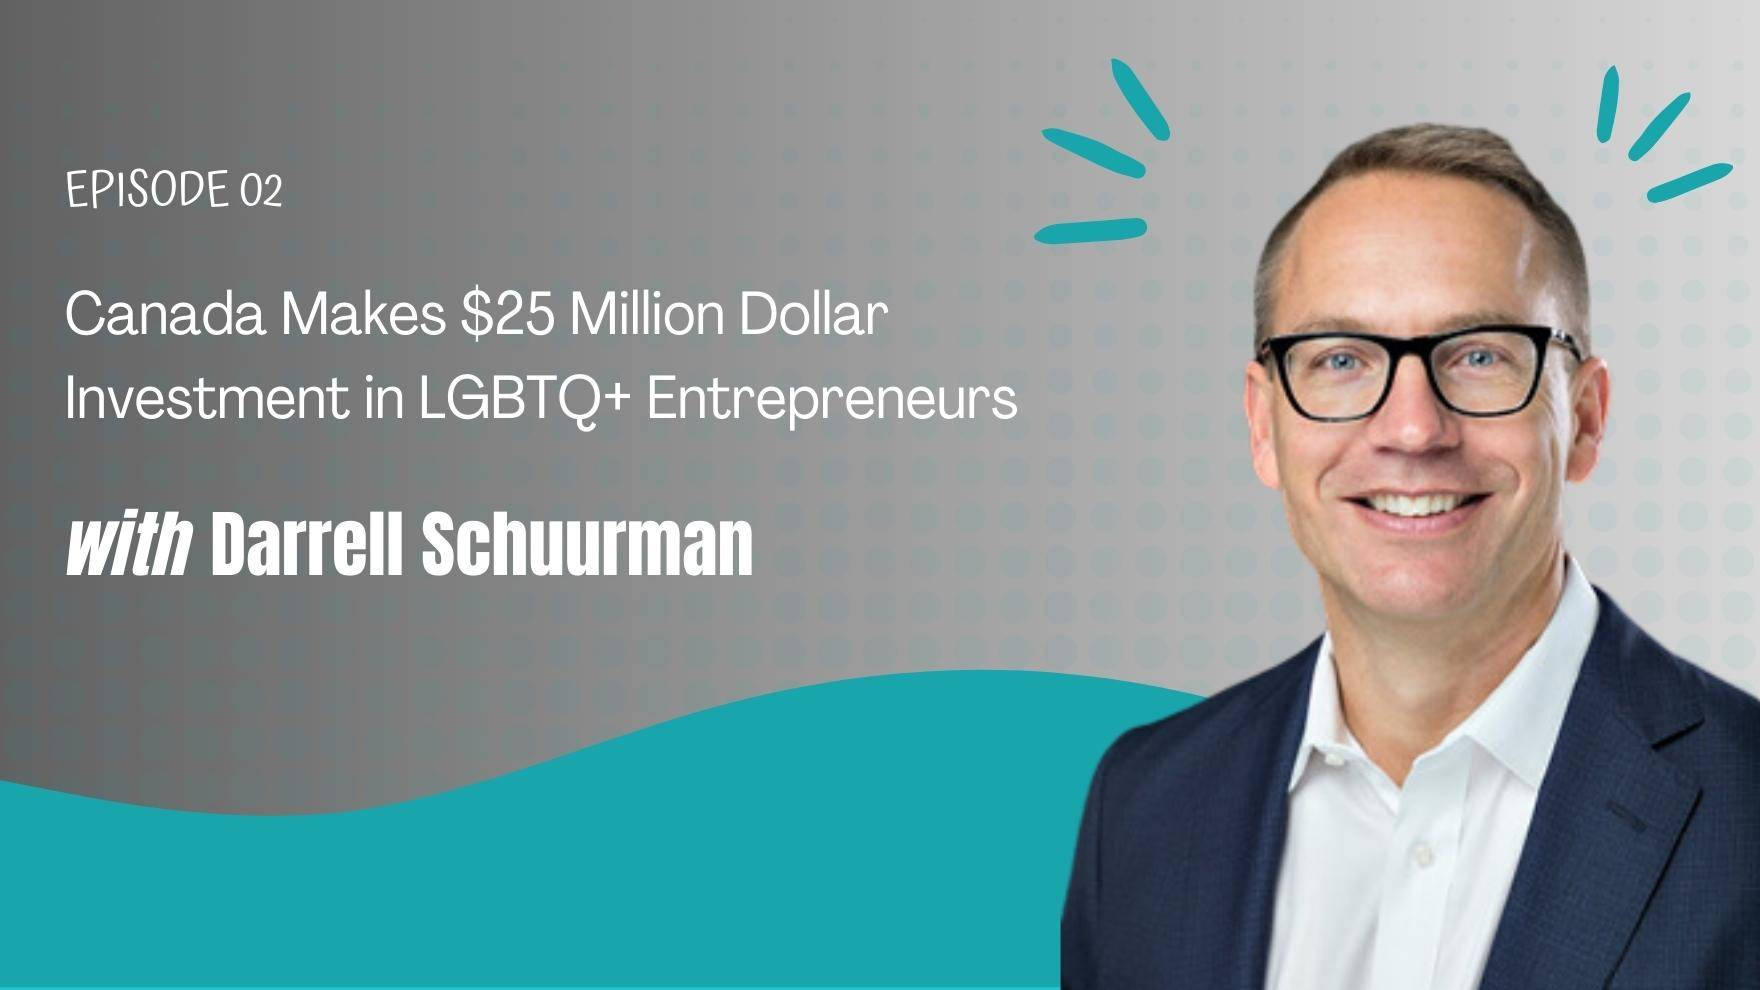 Canada Makes $25 Million Dollar Investment in LGBTQ+ Entrepreneurs with Darrell Schuurman